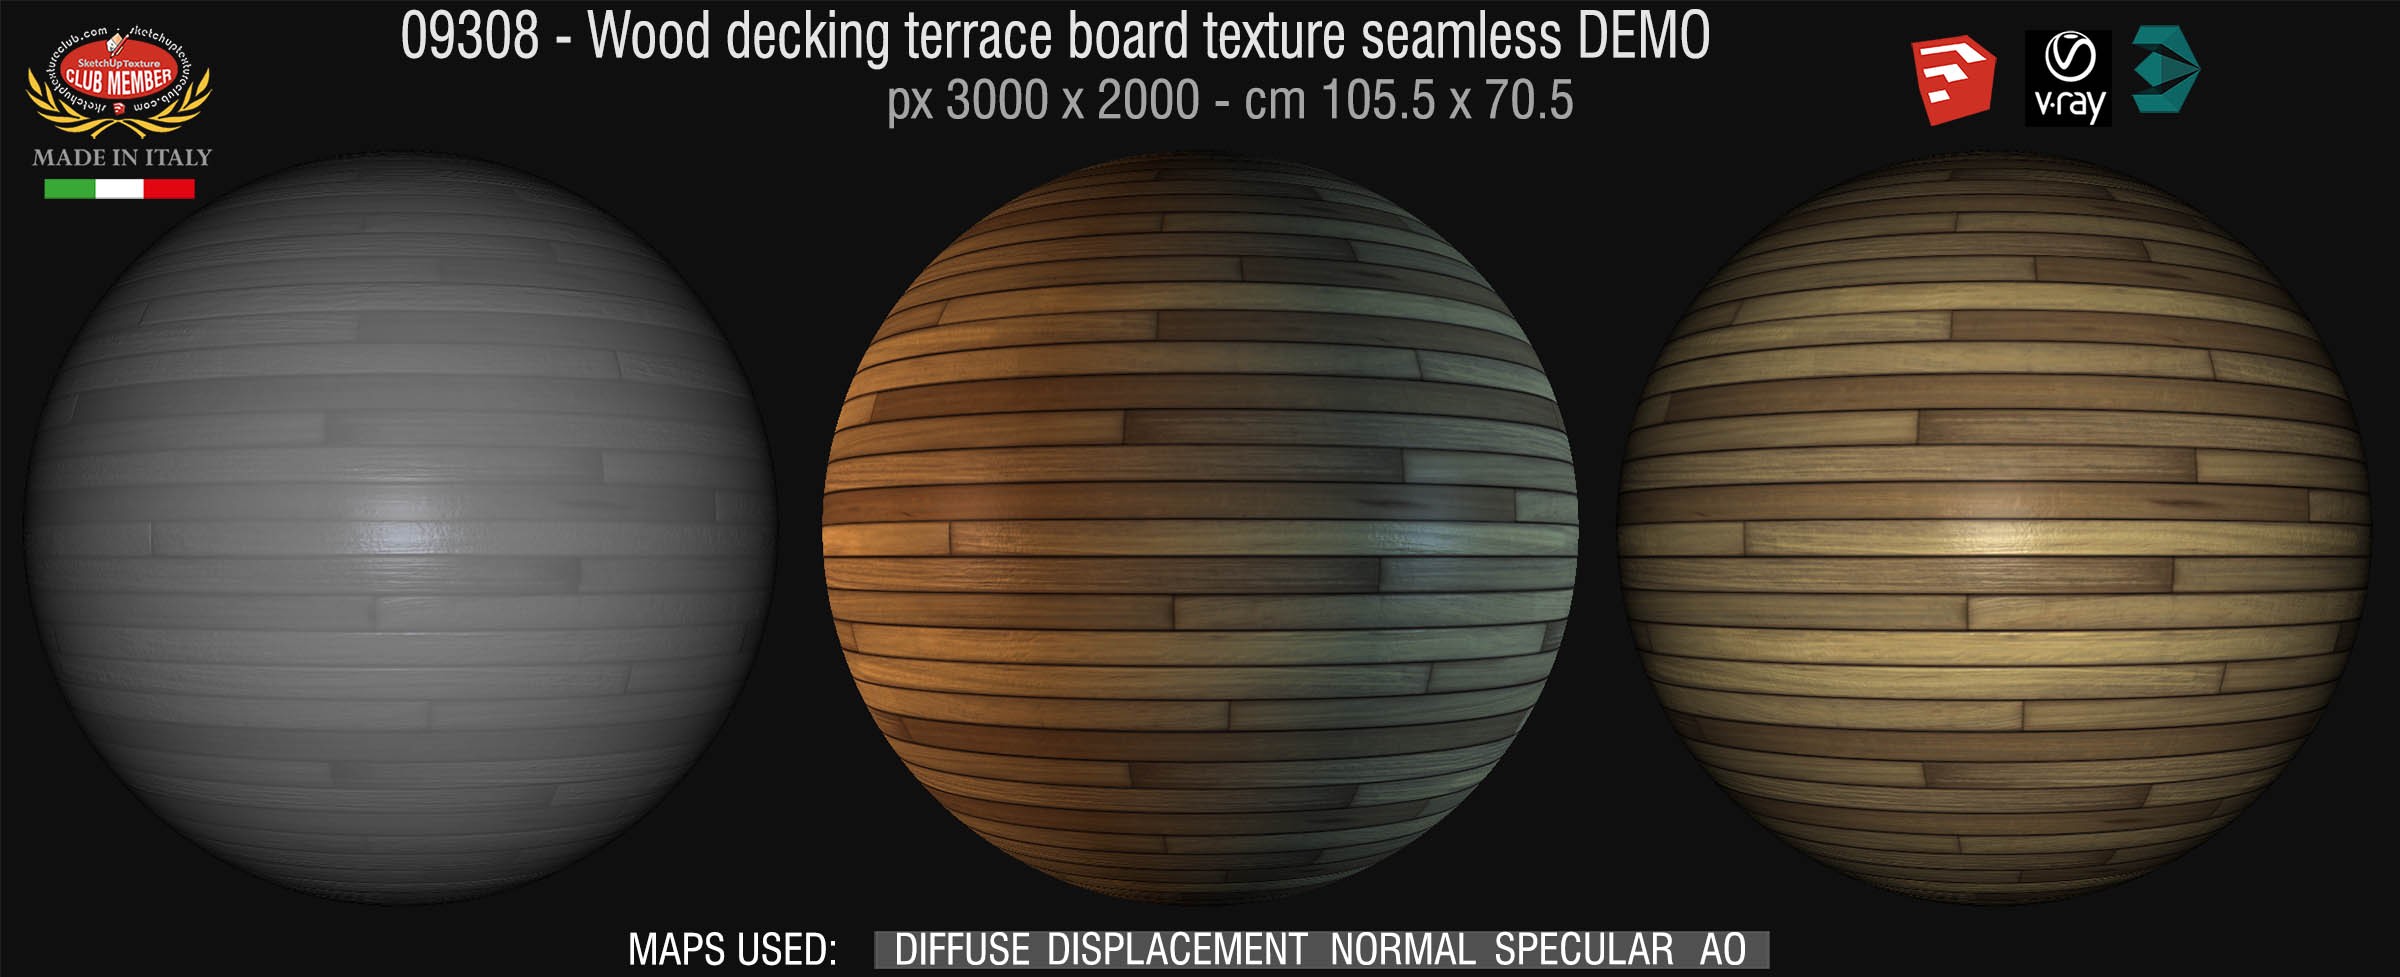 09308 HR Wood decking terrace board texture seamless + maps DEMO